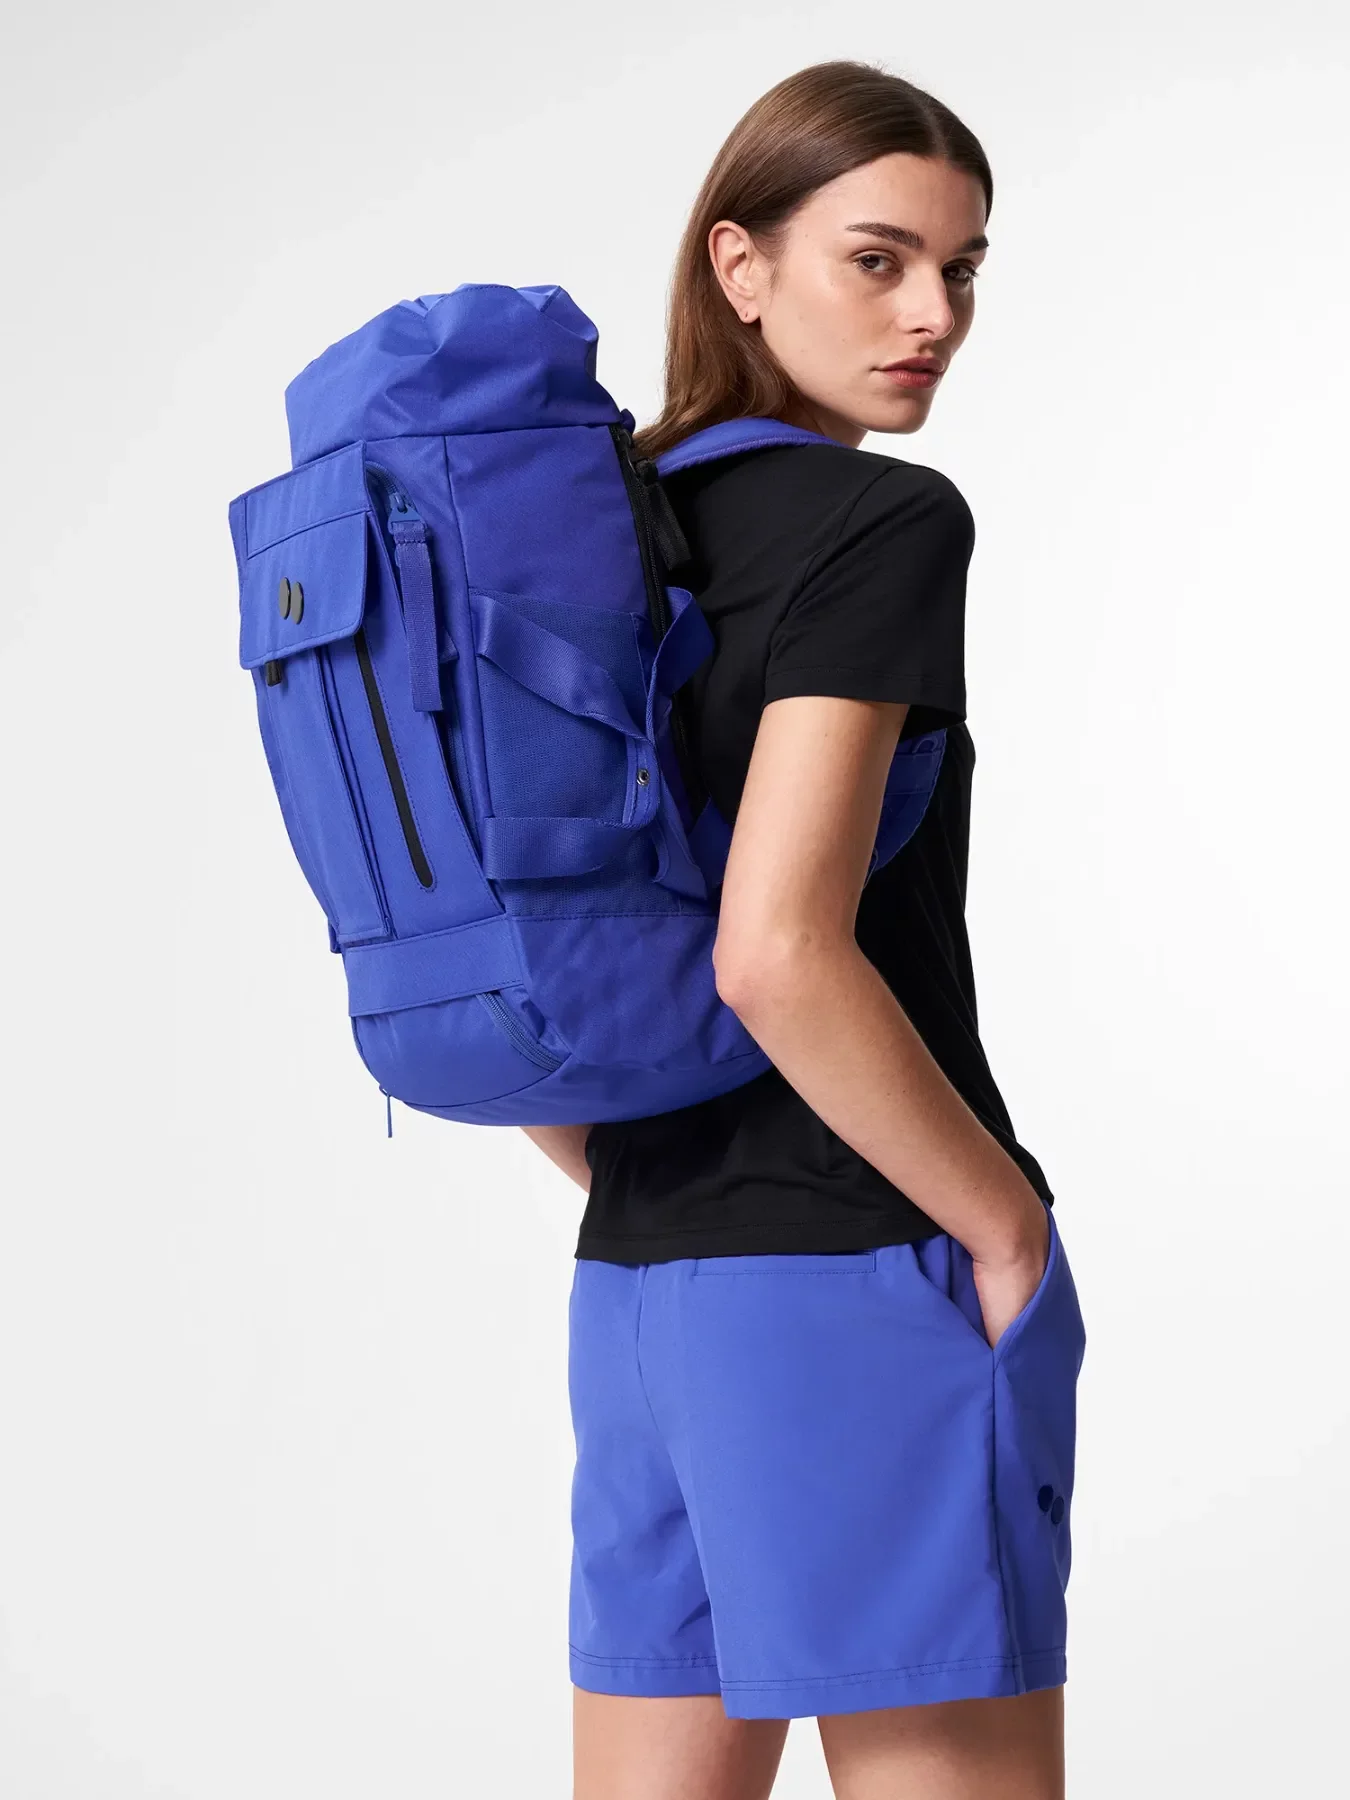 pinqponq Backpack BLOK medium Construct - Poppy Blue 7